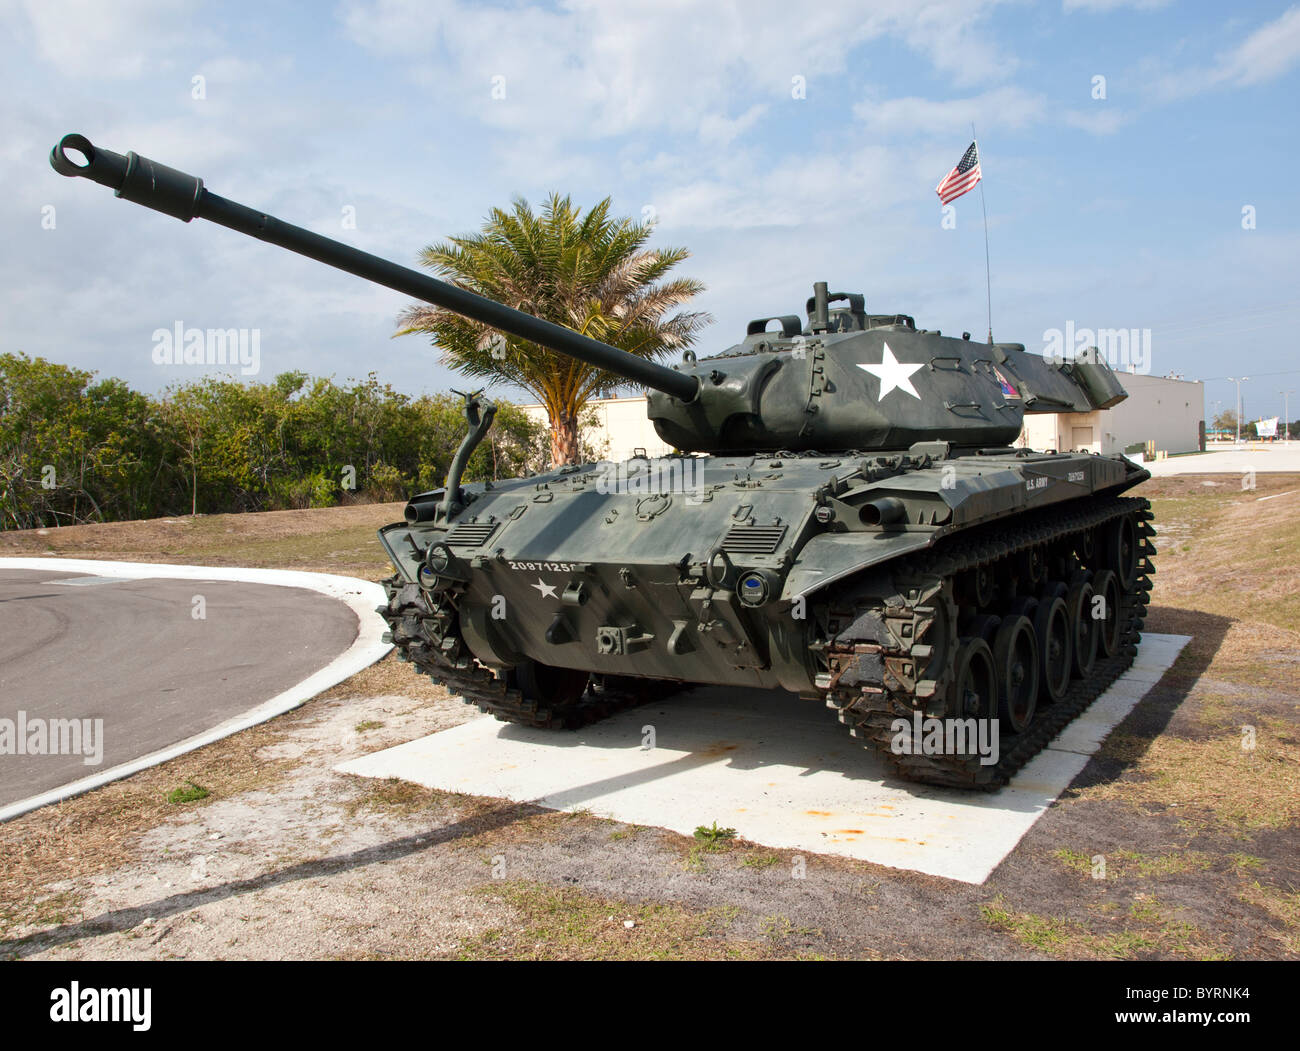 Korean War US Army M41A3 Walker Bulldog Tank at Brevard Veterans Memorial on Merritt Island by the Indian River Lagoon Florida Stock Photo